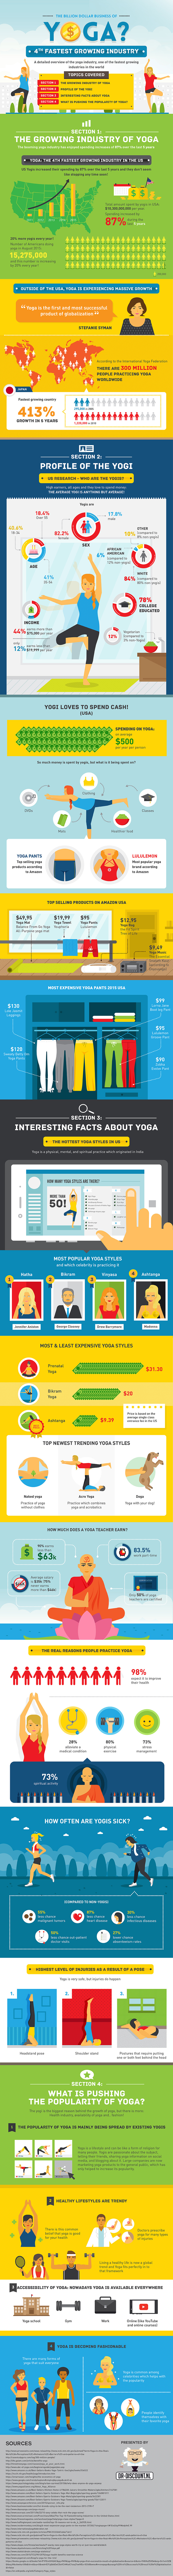 infographic yoga industry demographic statistics 